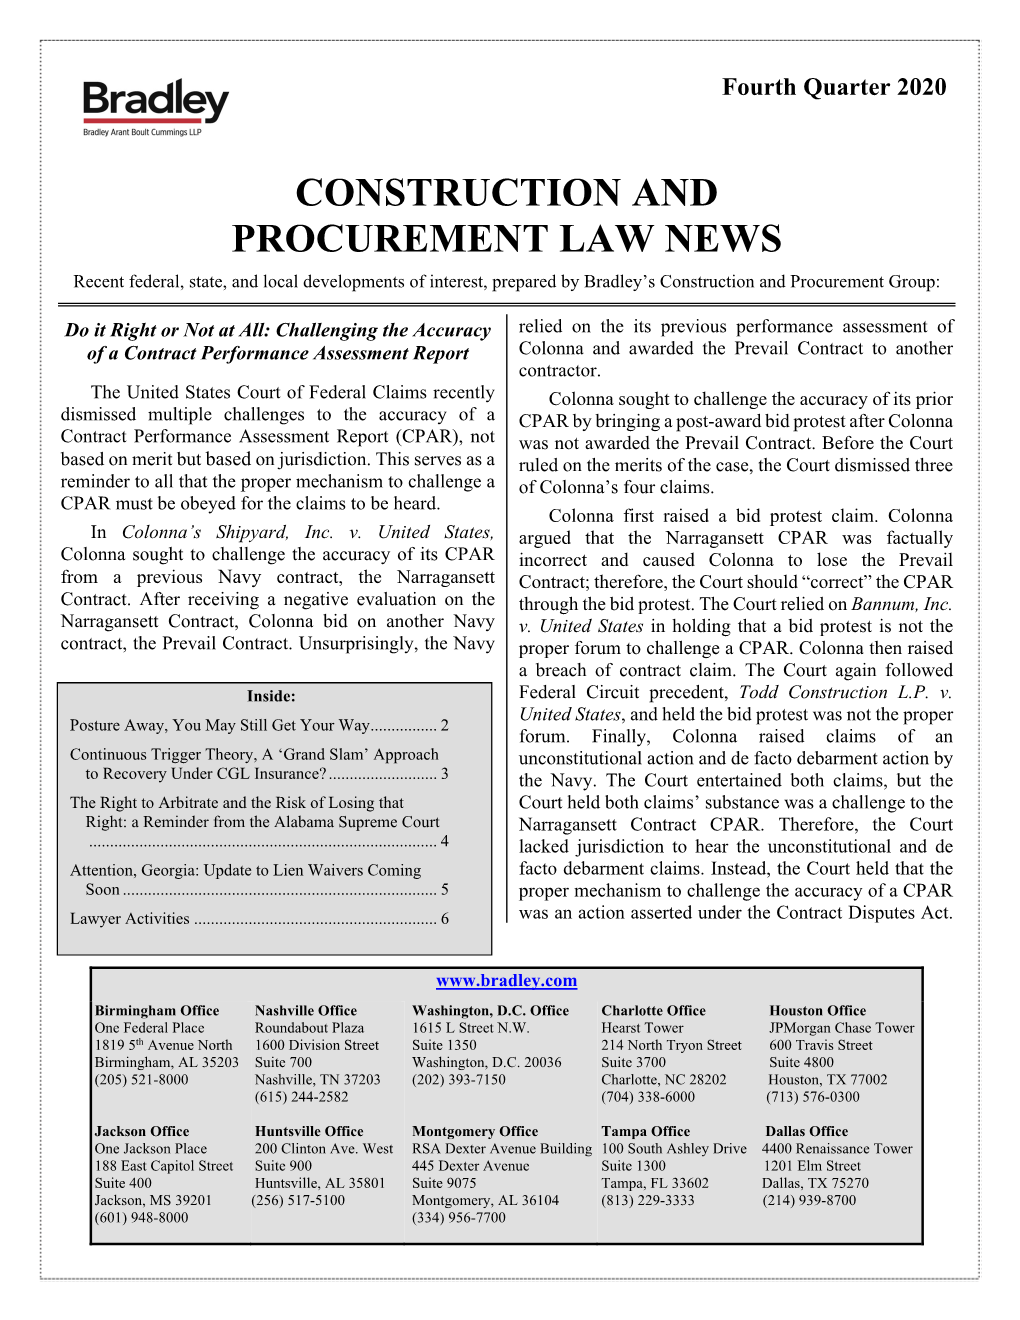 Construction and Procurement Law News